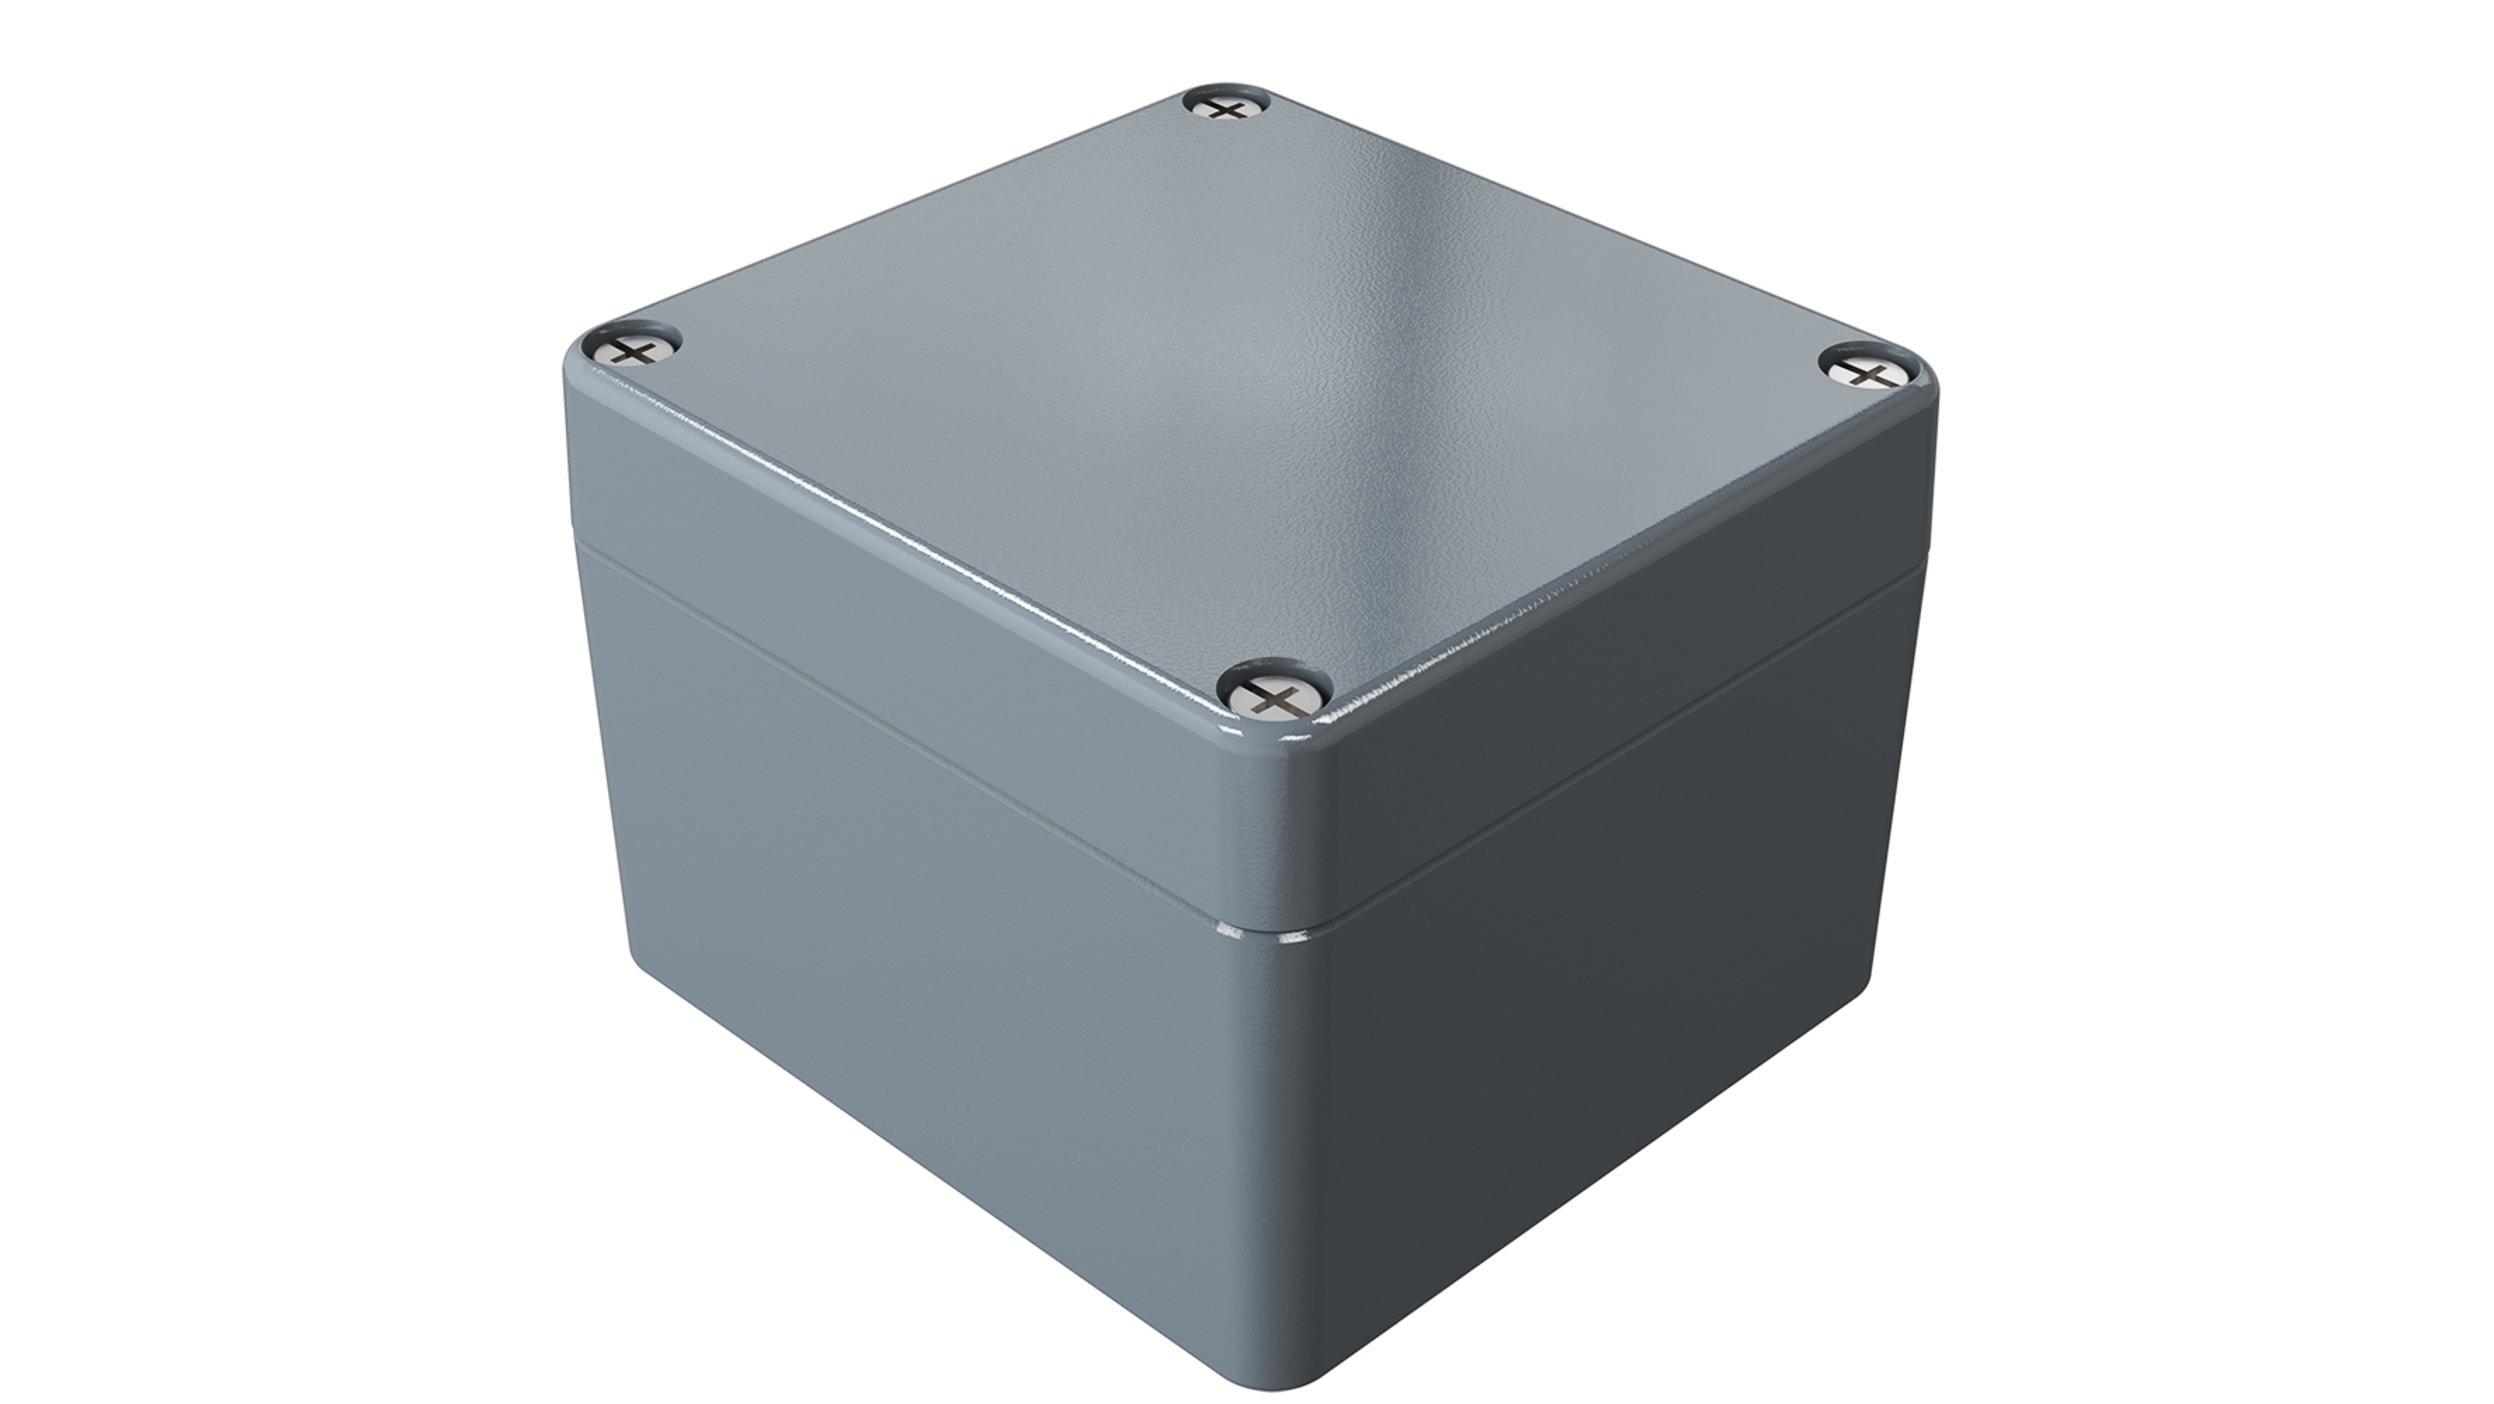 Caja RS PRO de Aluminio Presofundido Plateado, 250 x 250 x 100mm, IP66,  Apantallada Código RS: 517-3428